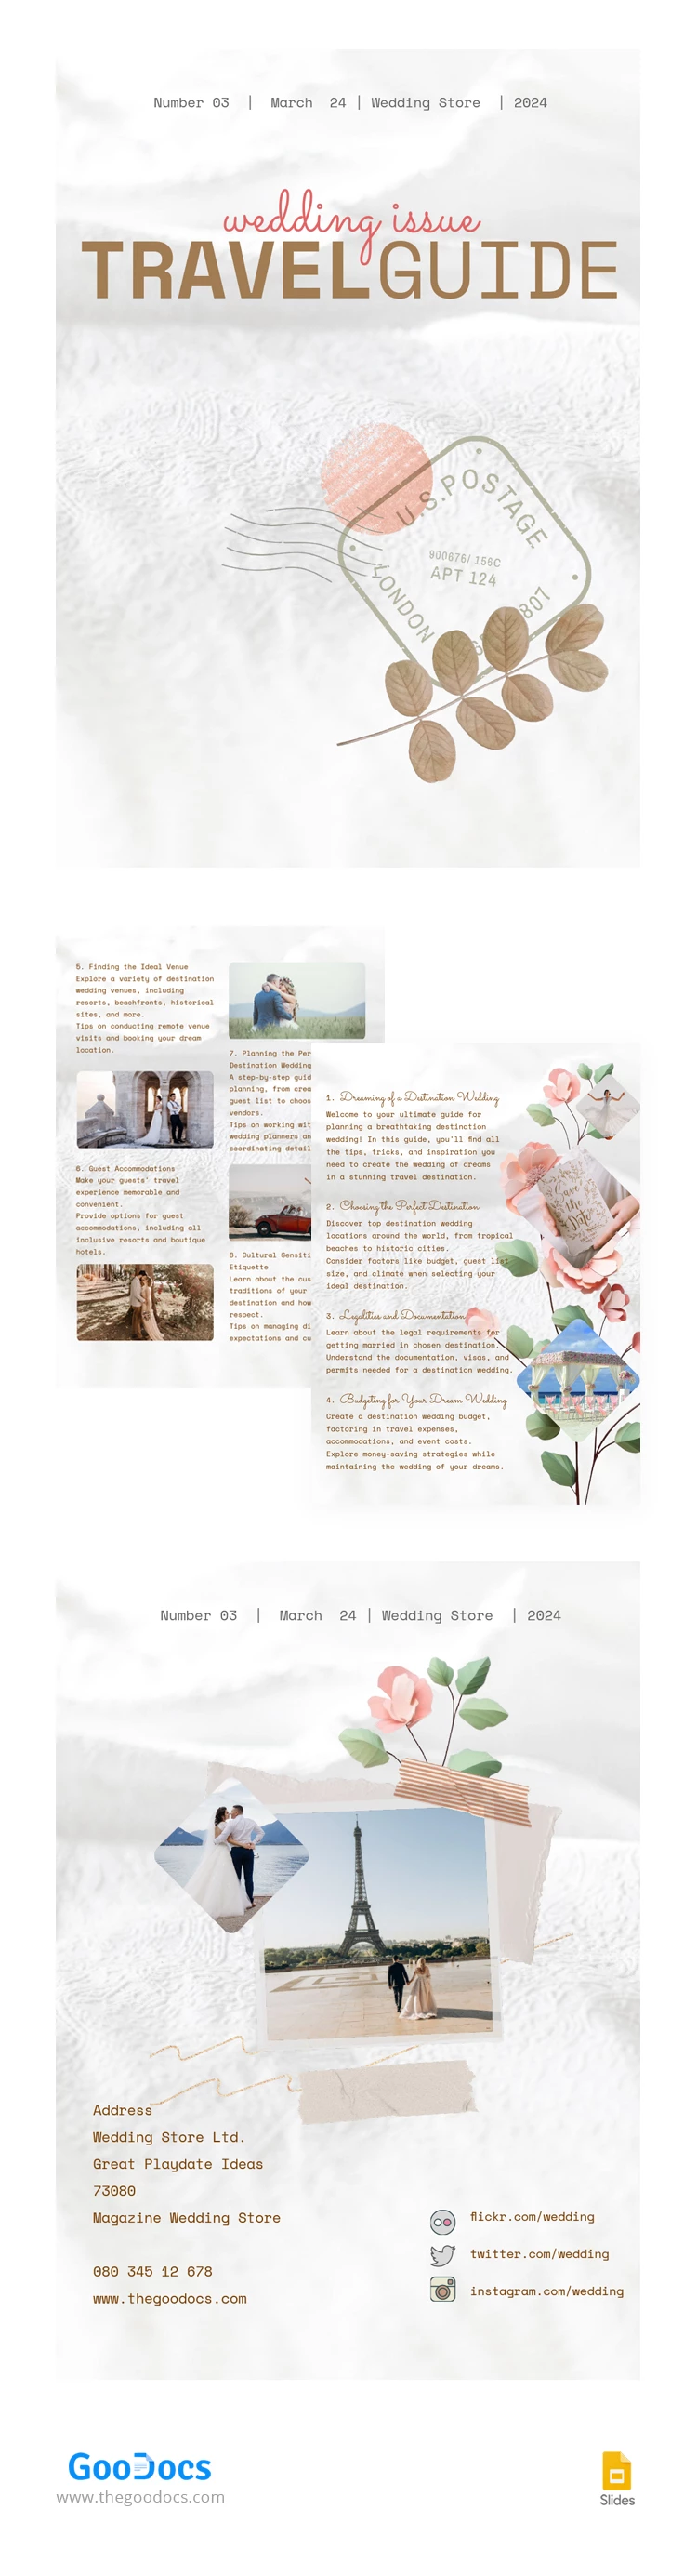 Wedding Travel Guide Magazine - free Google Docs Template - 10067403